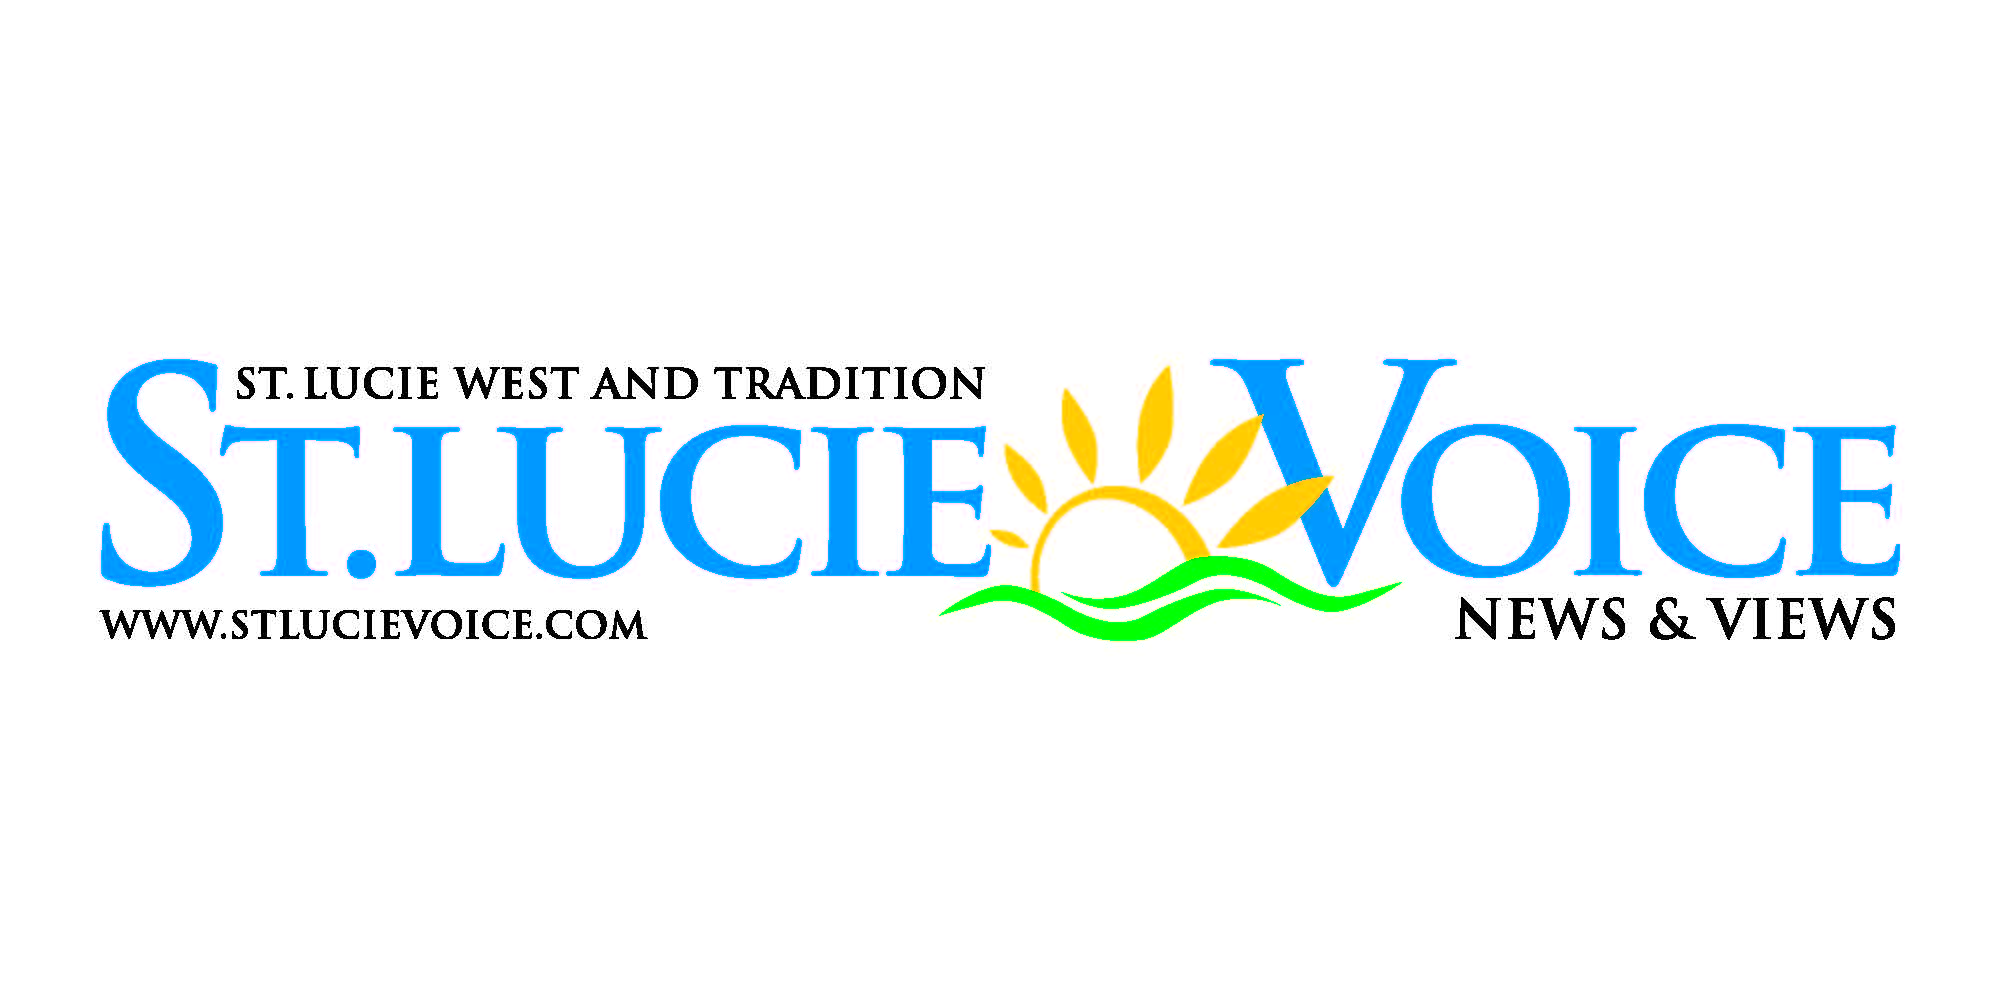 St. Lucie Voice, Vero Beach 32963 & Vero News Publications